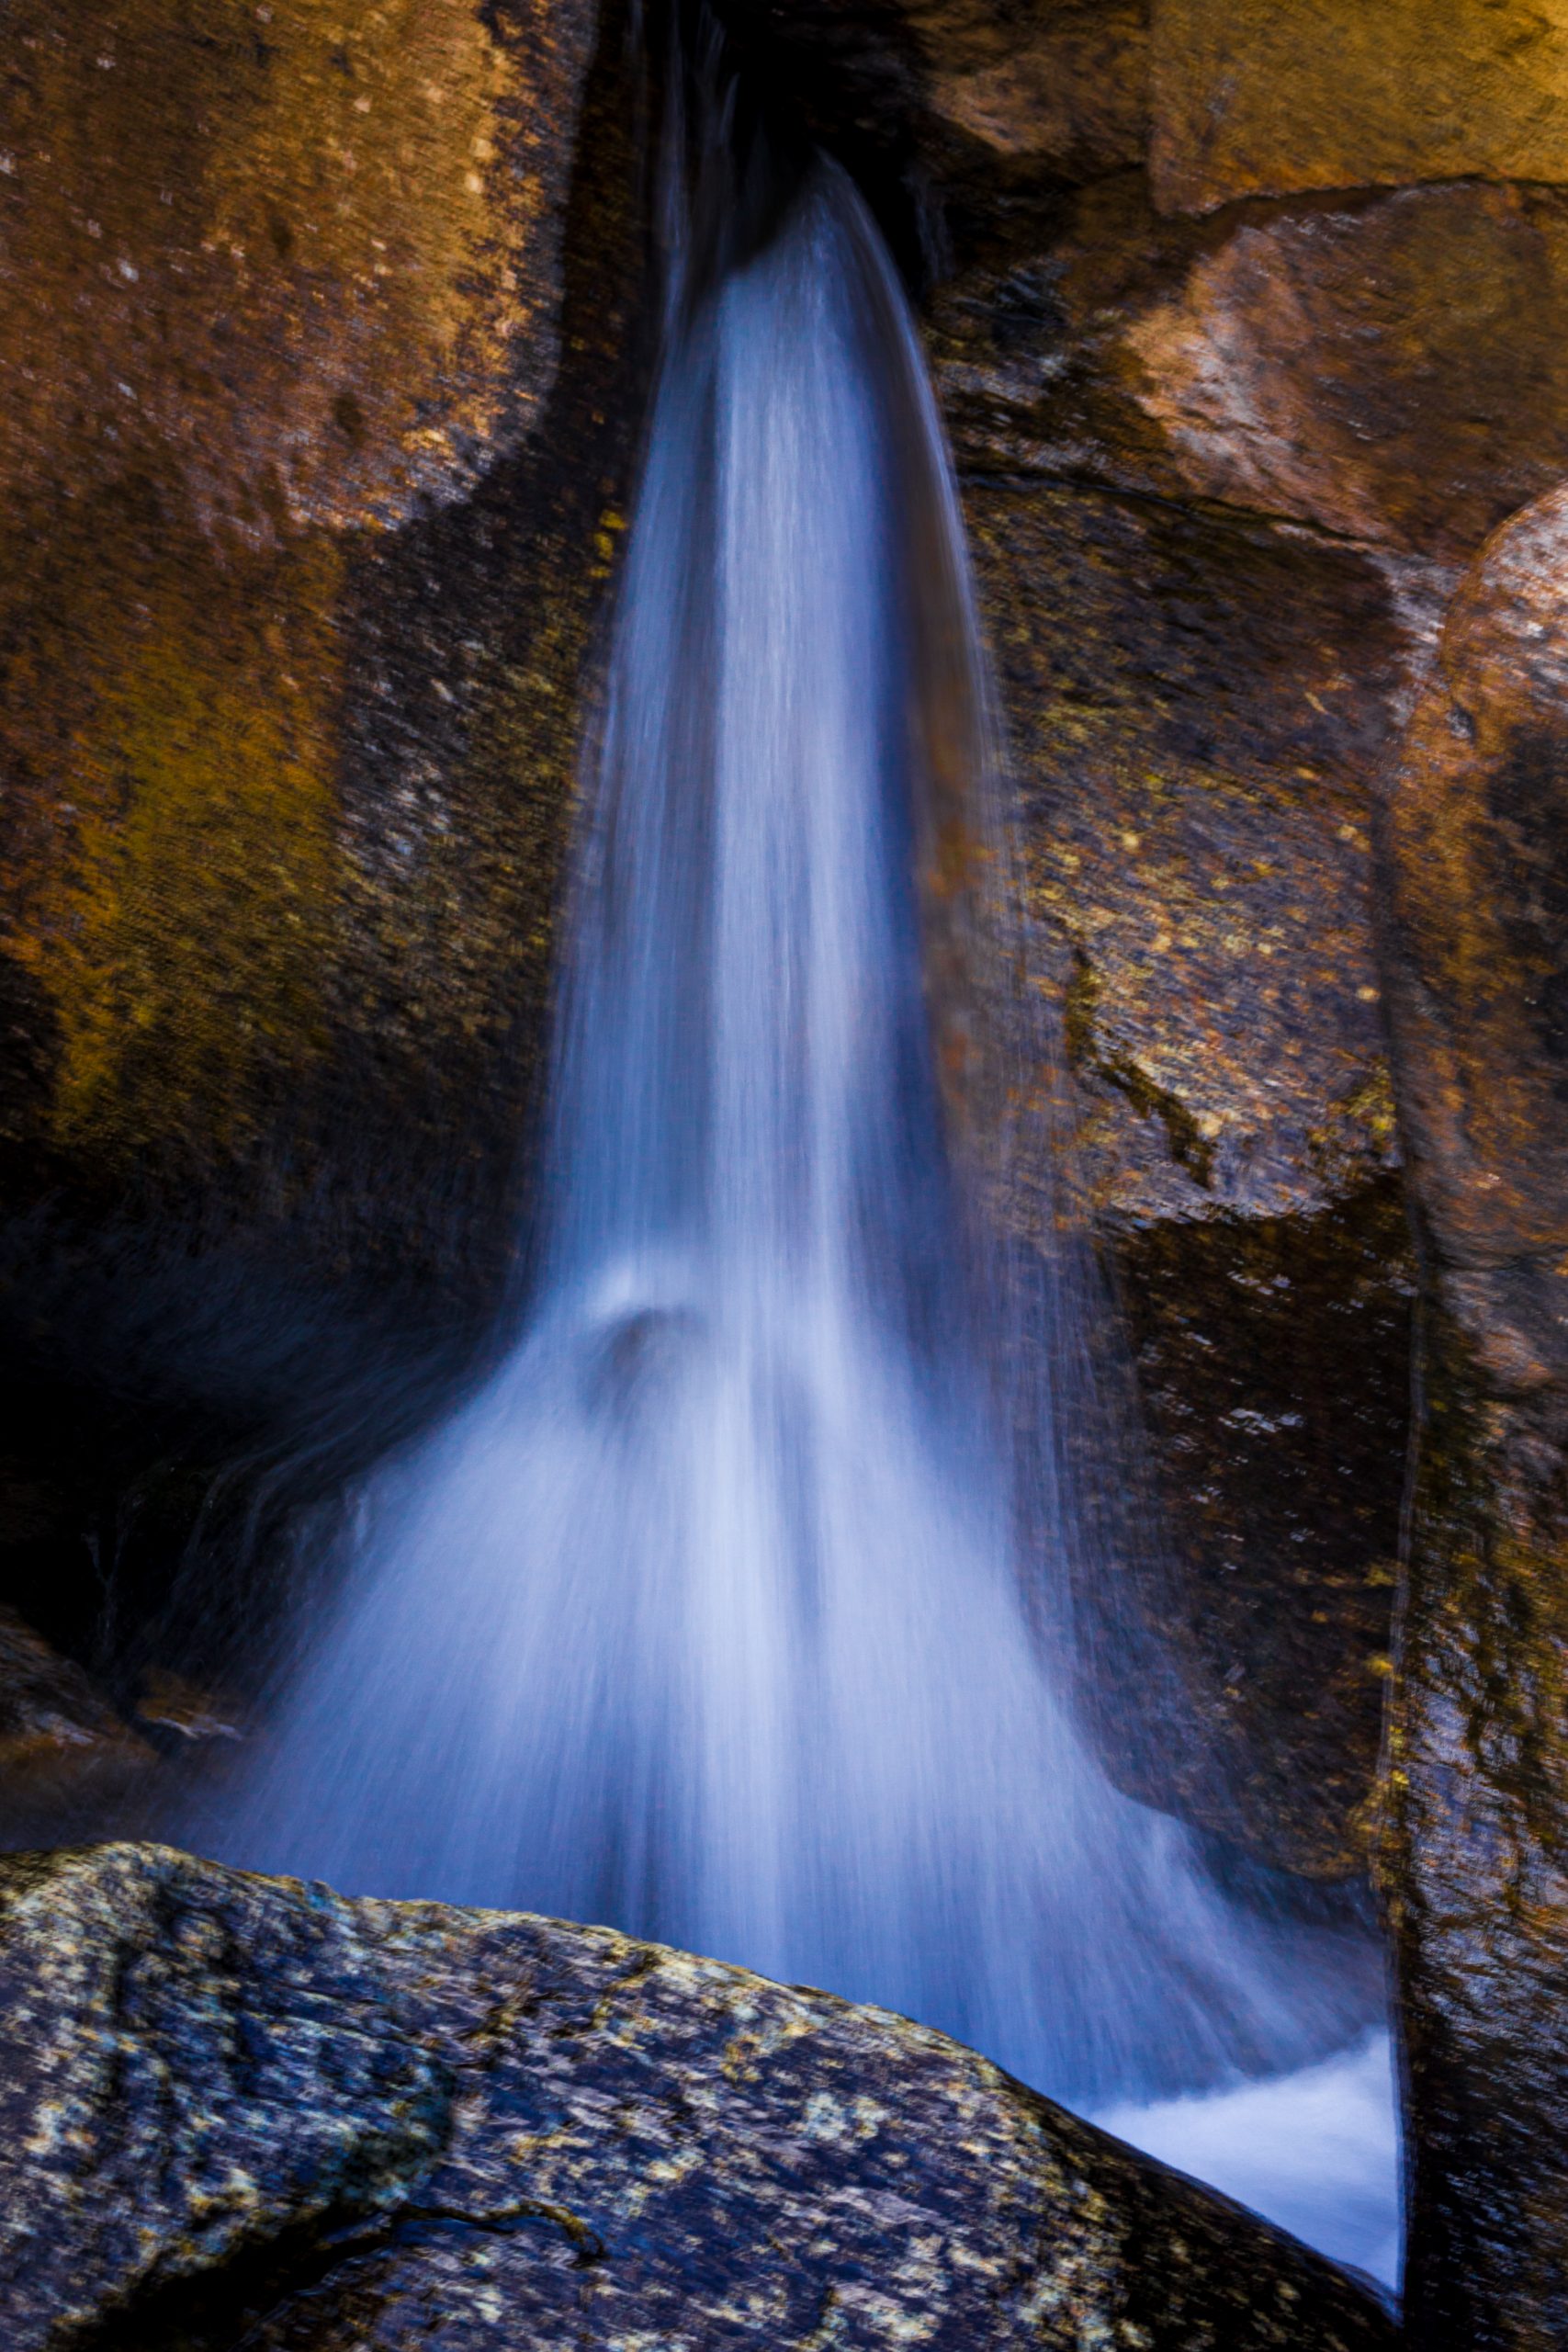 A waterfall